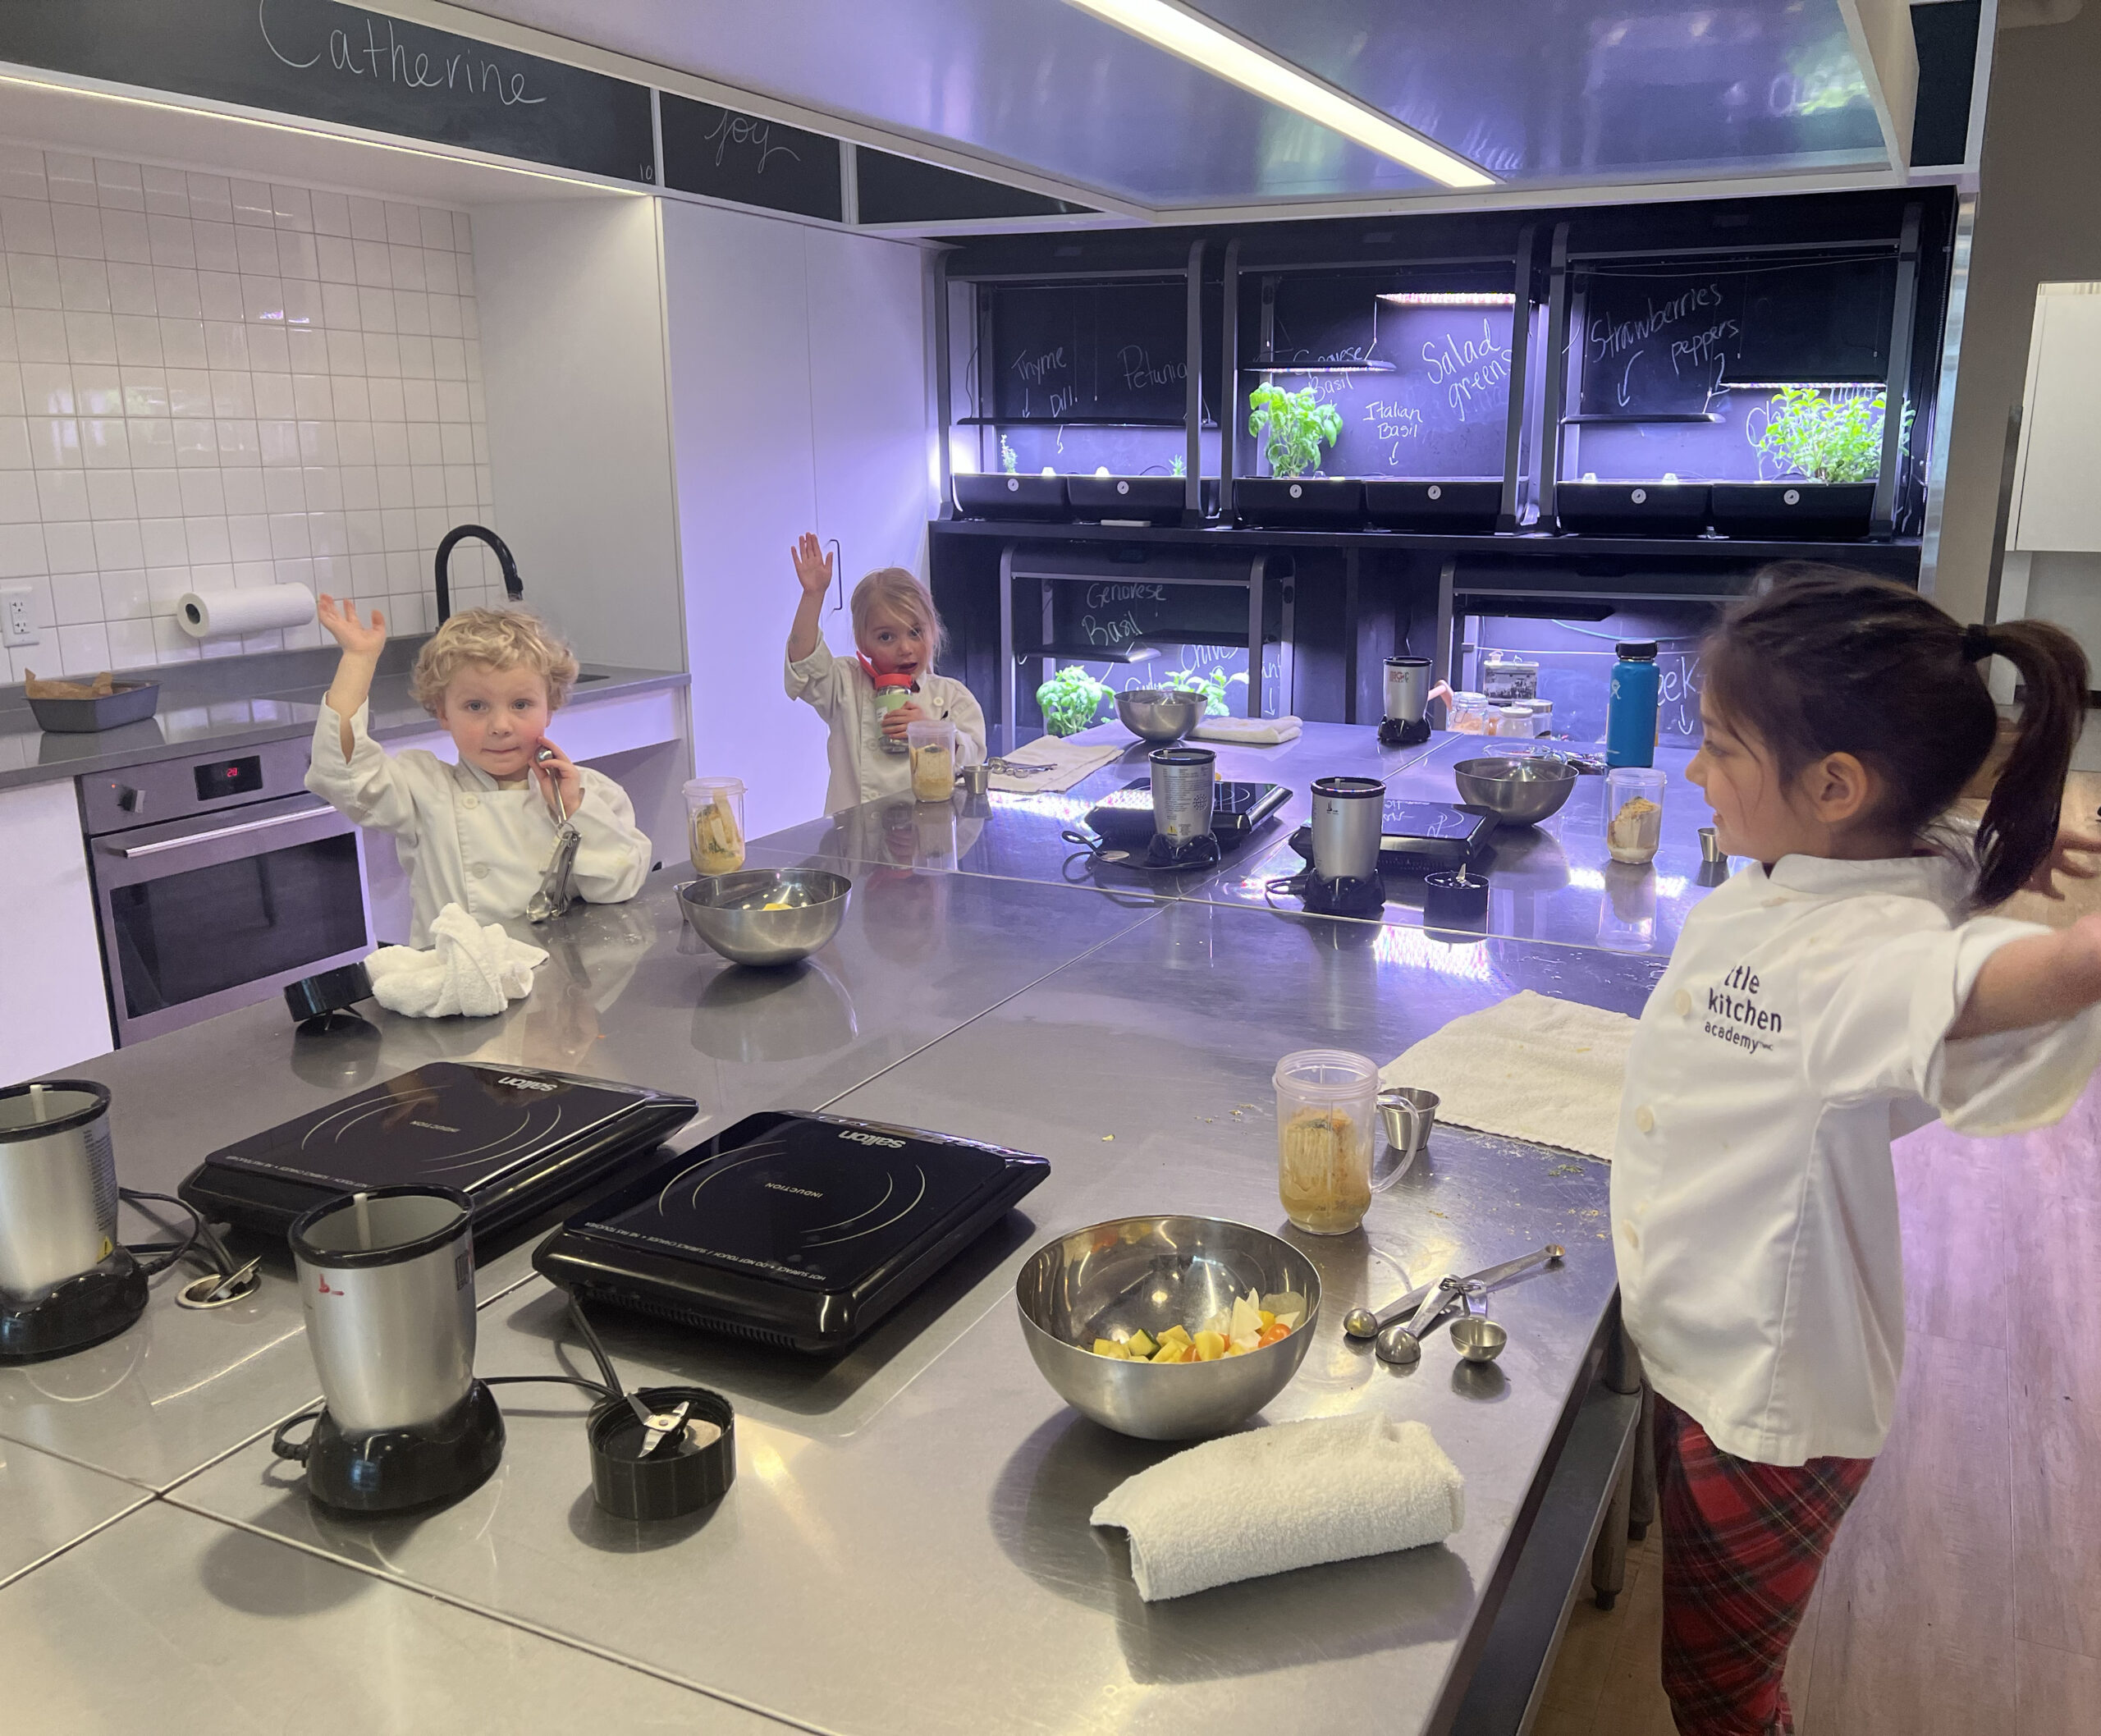 Little Kitchen Academy in Plainfield teaching kids skills beyond